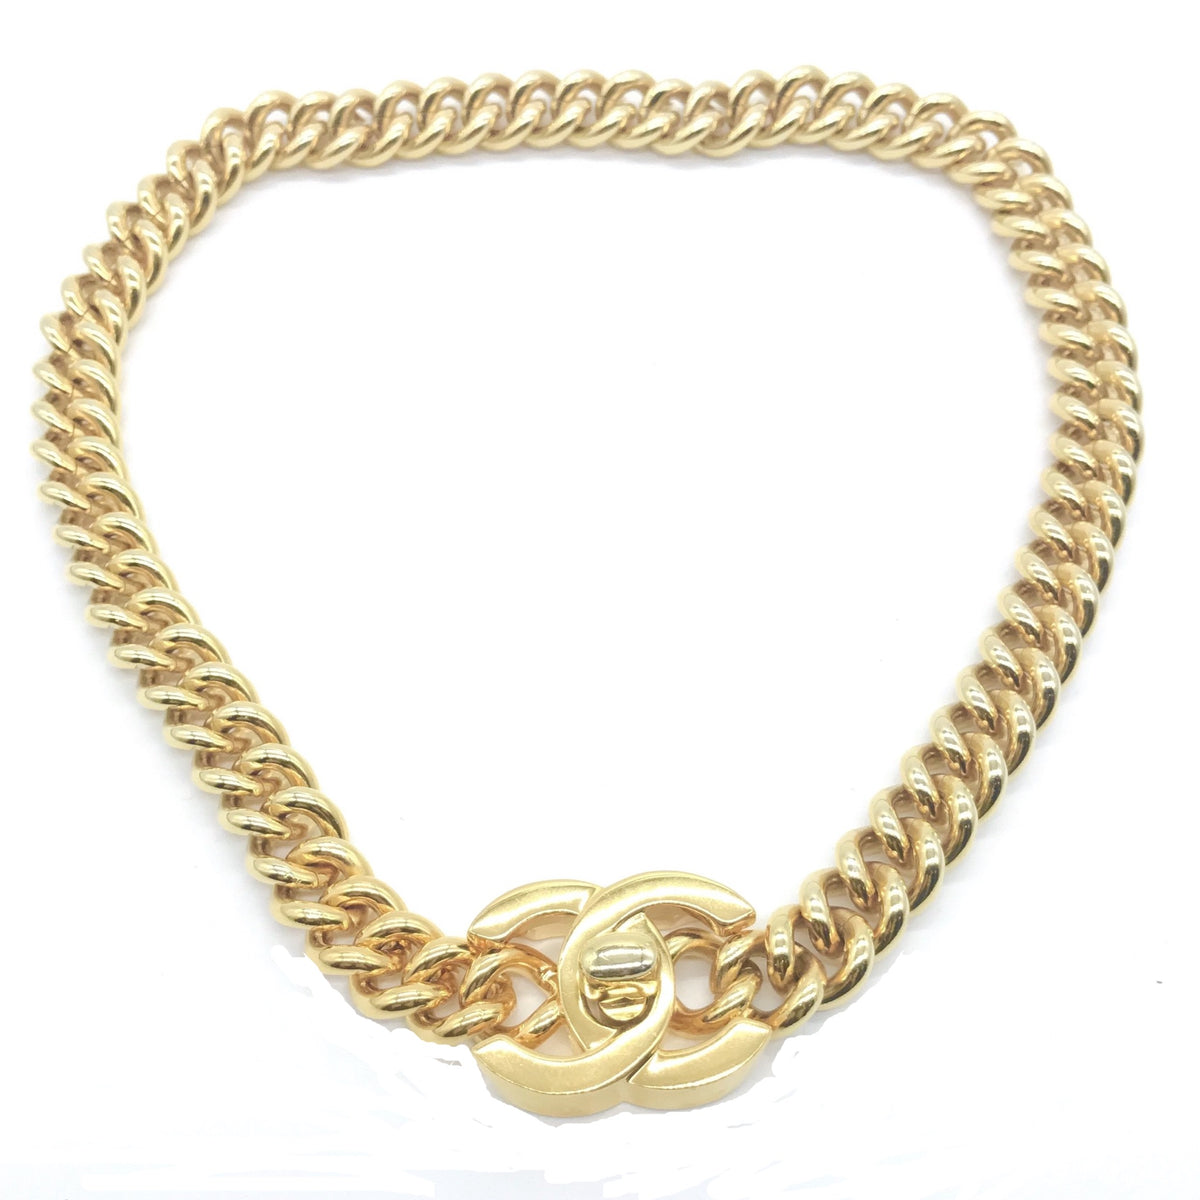 Chanel Goldtone Turnlock Necklace - VeryVintage – Very Vintage